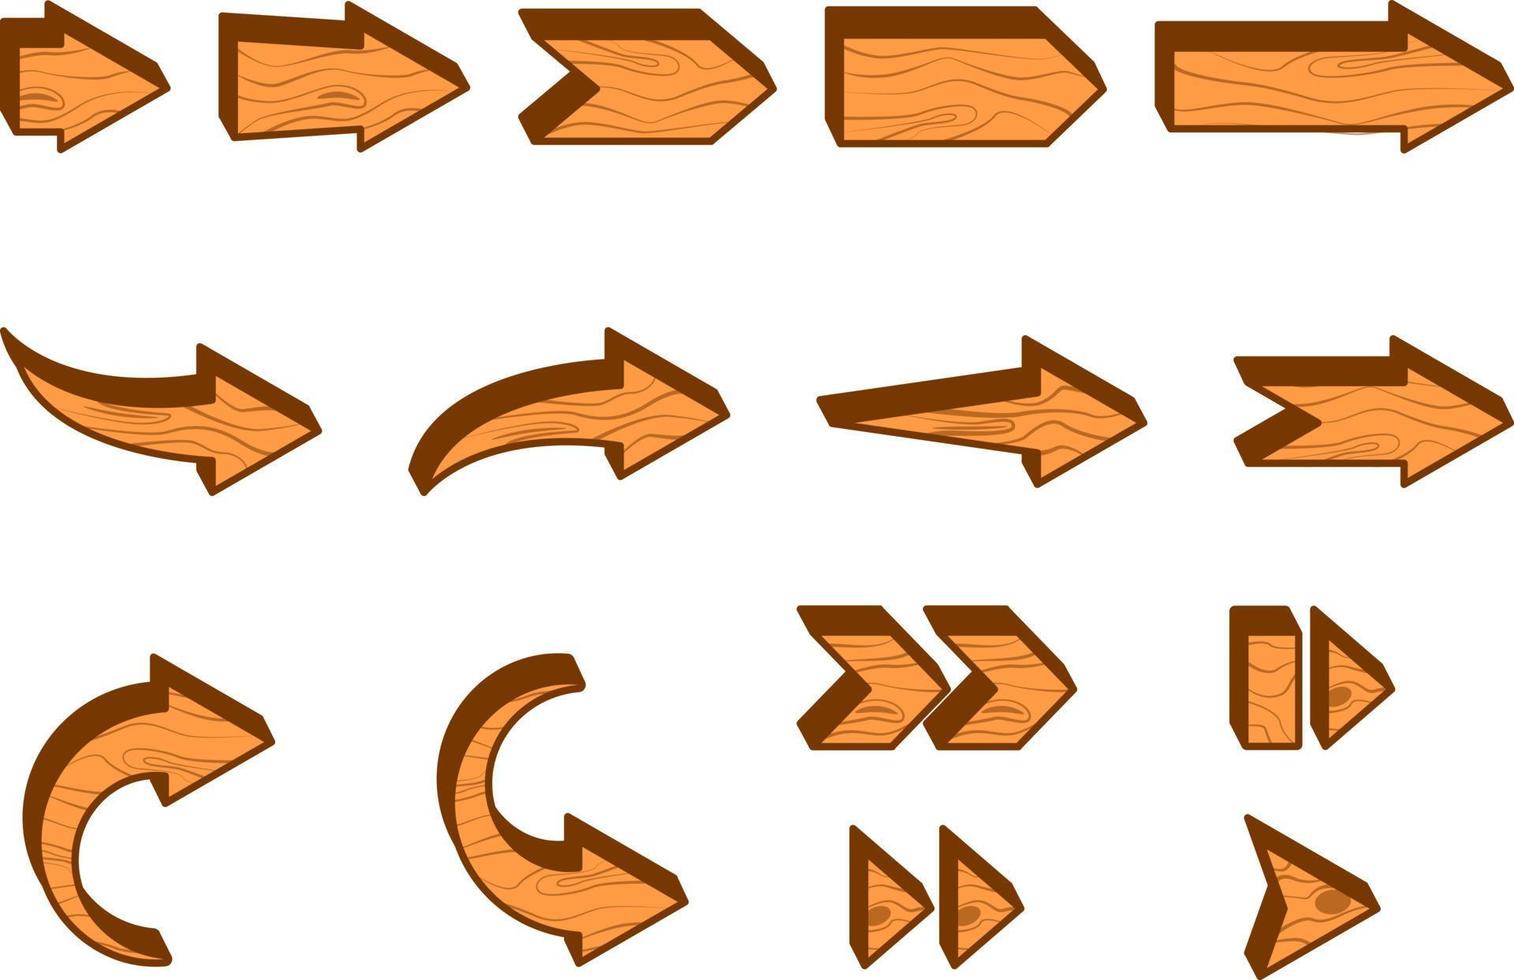 3d various arrow style in wooden texture vector